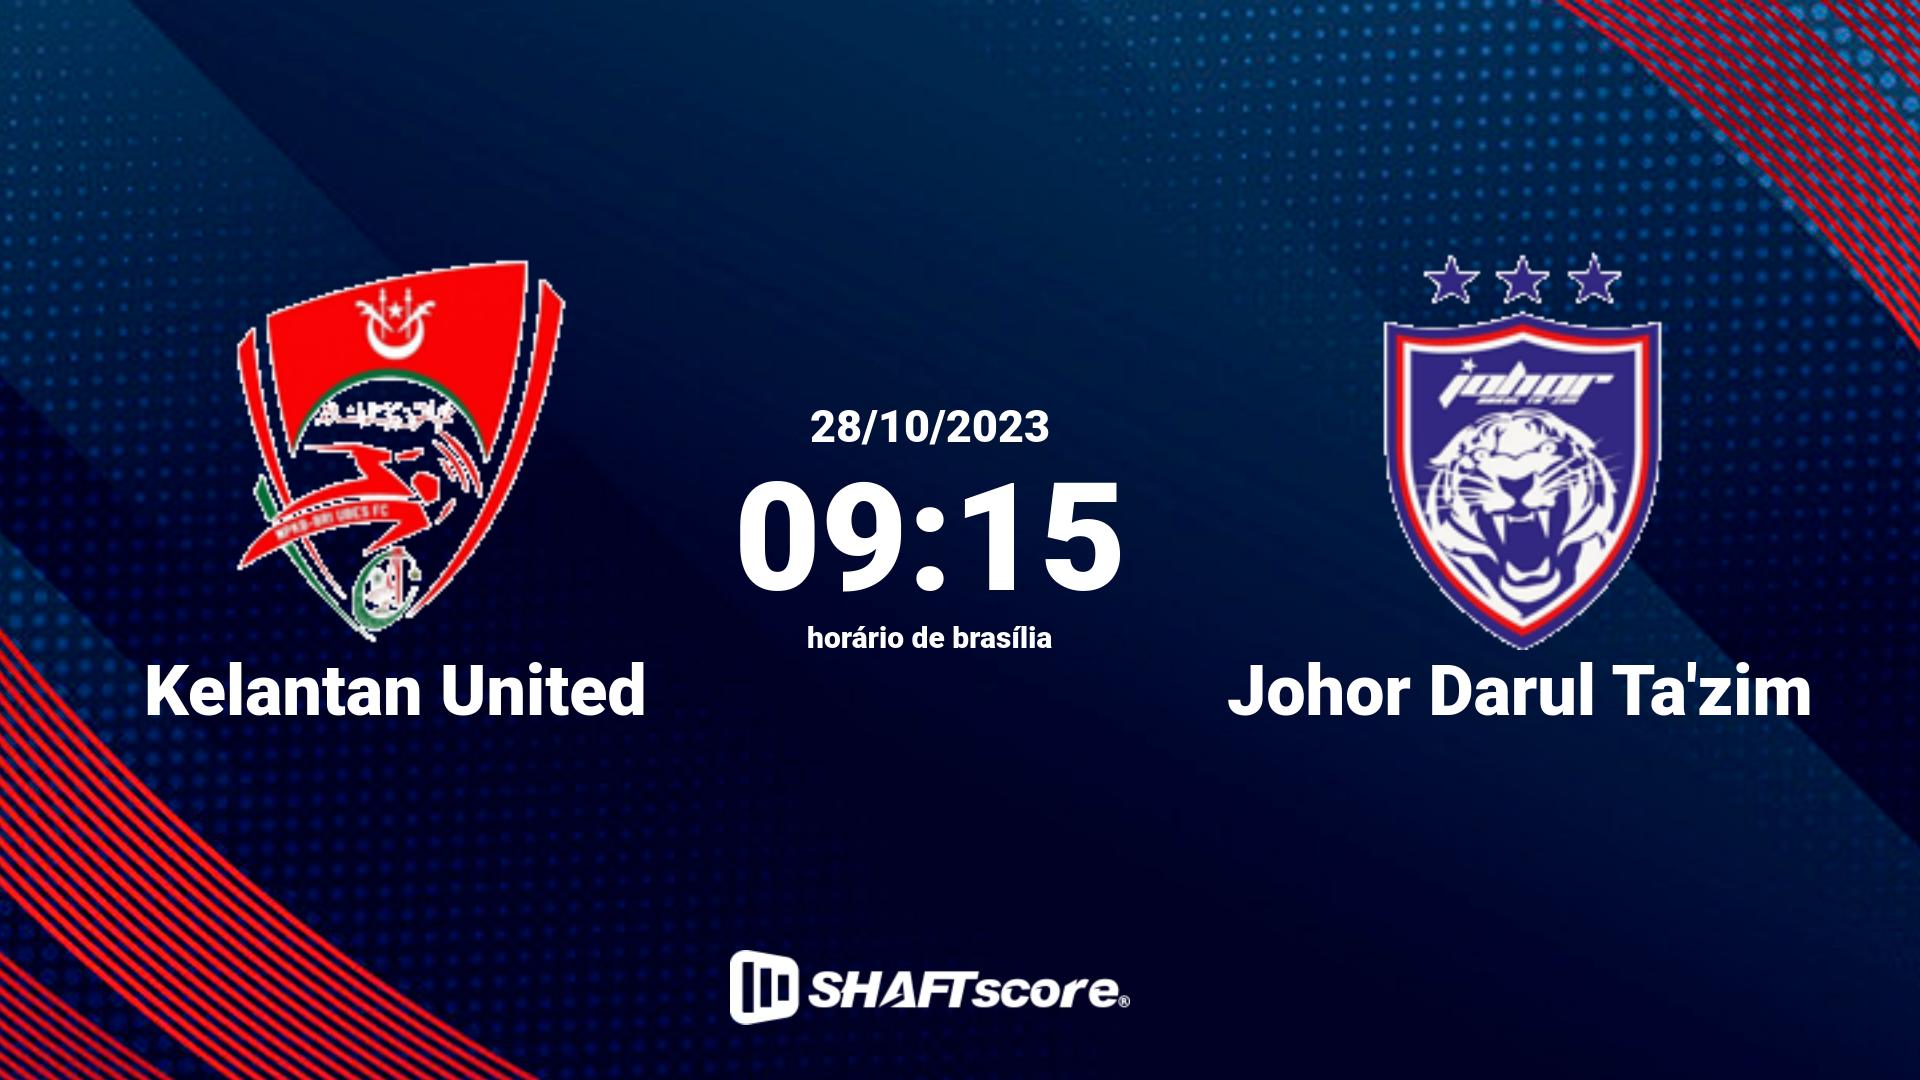 Estatísticas do jogo Kelantan United vs Johor Darul Ta'zim 28.10 09:15